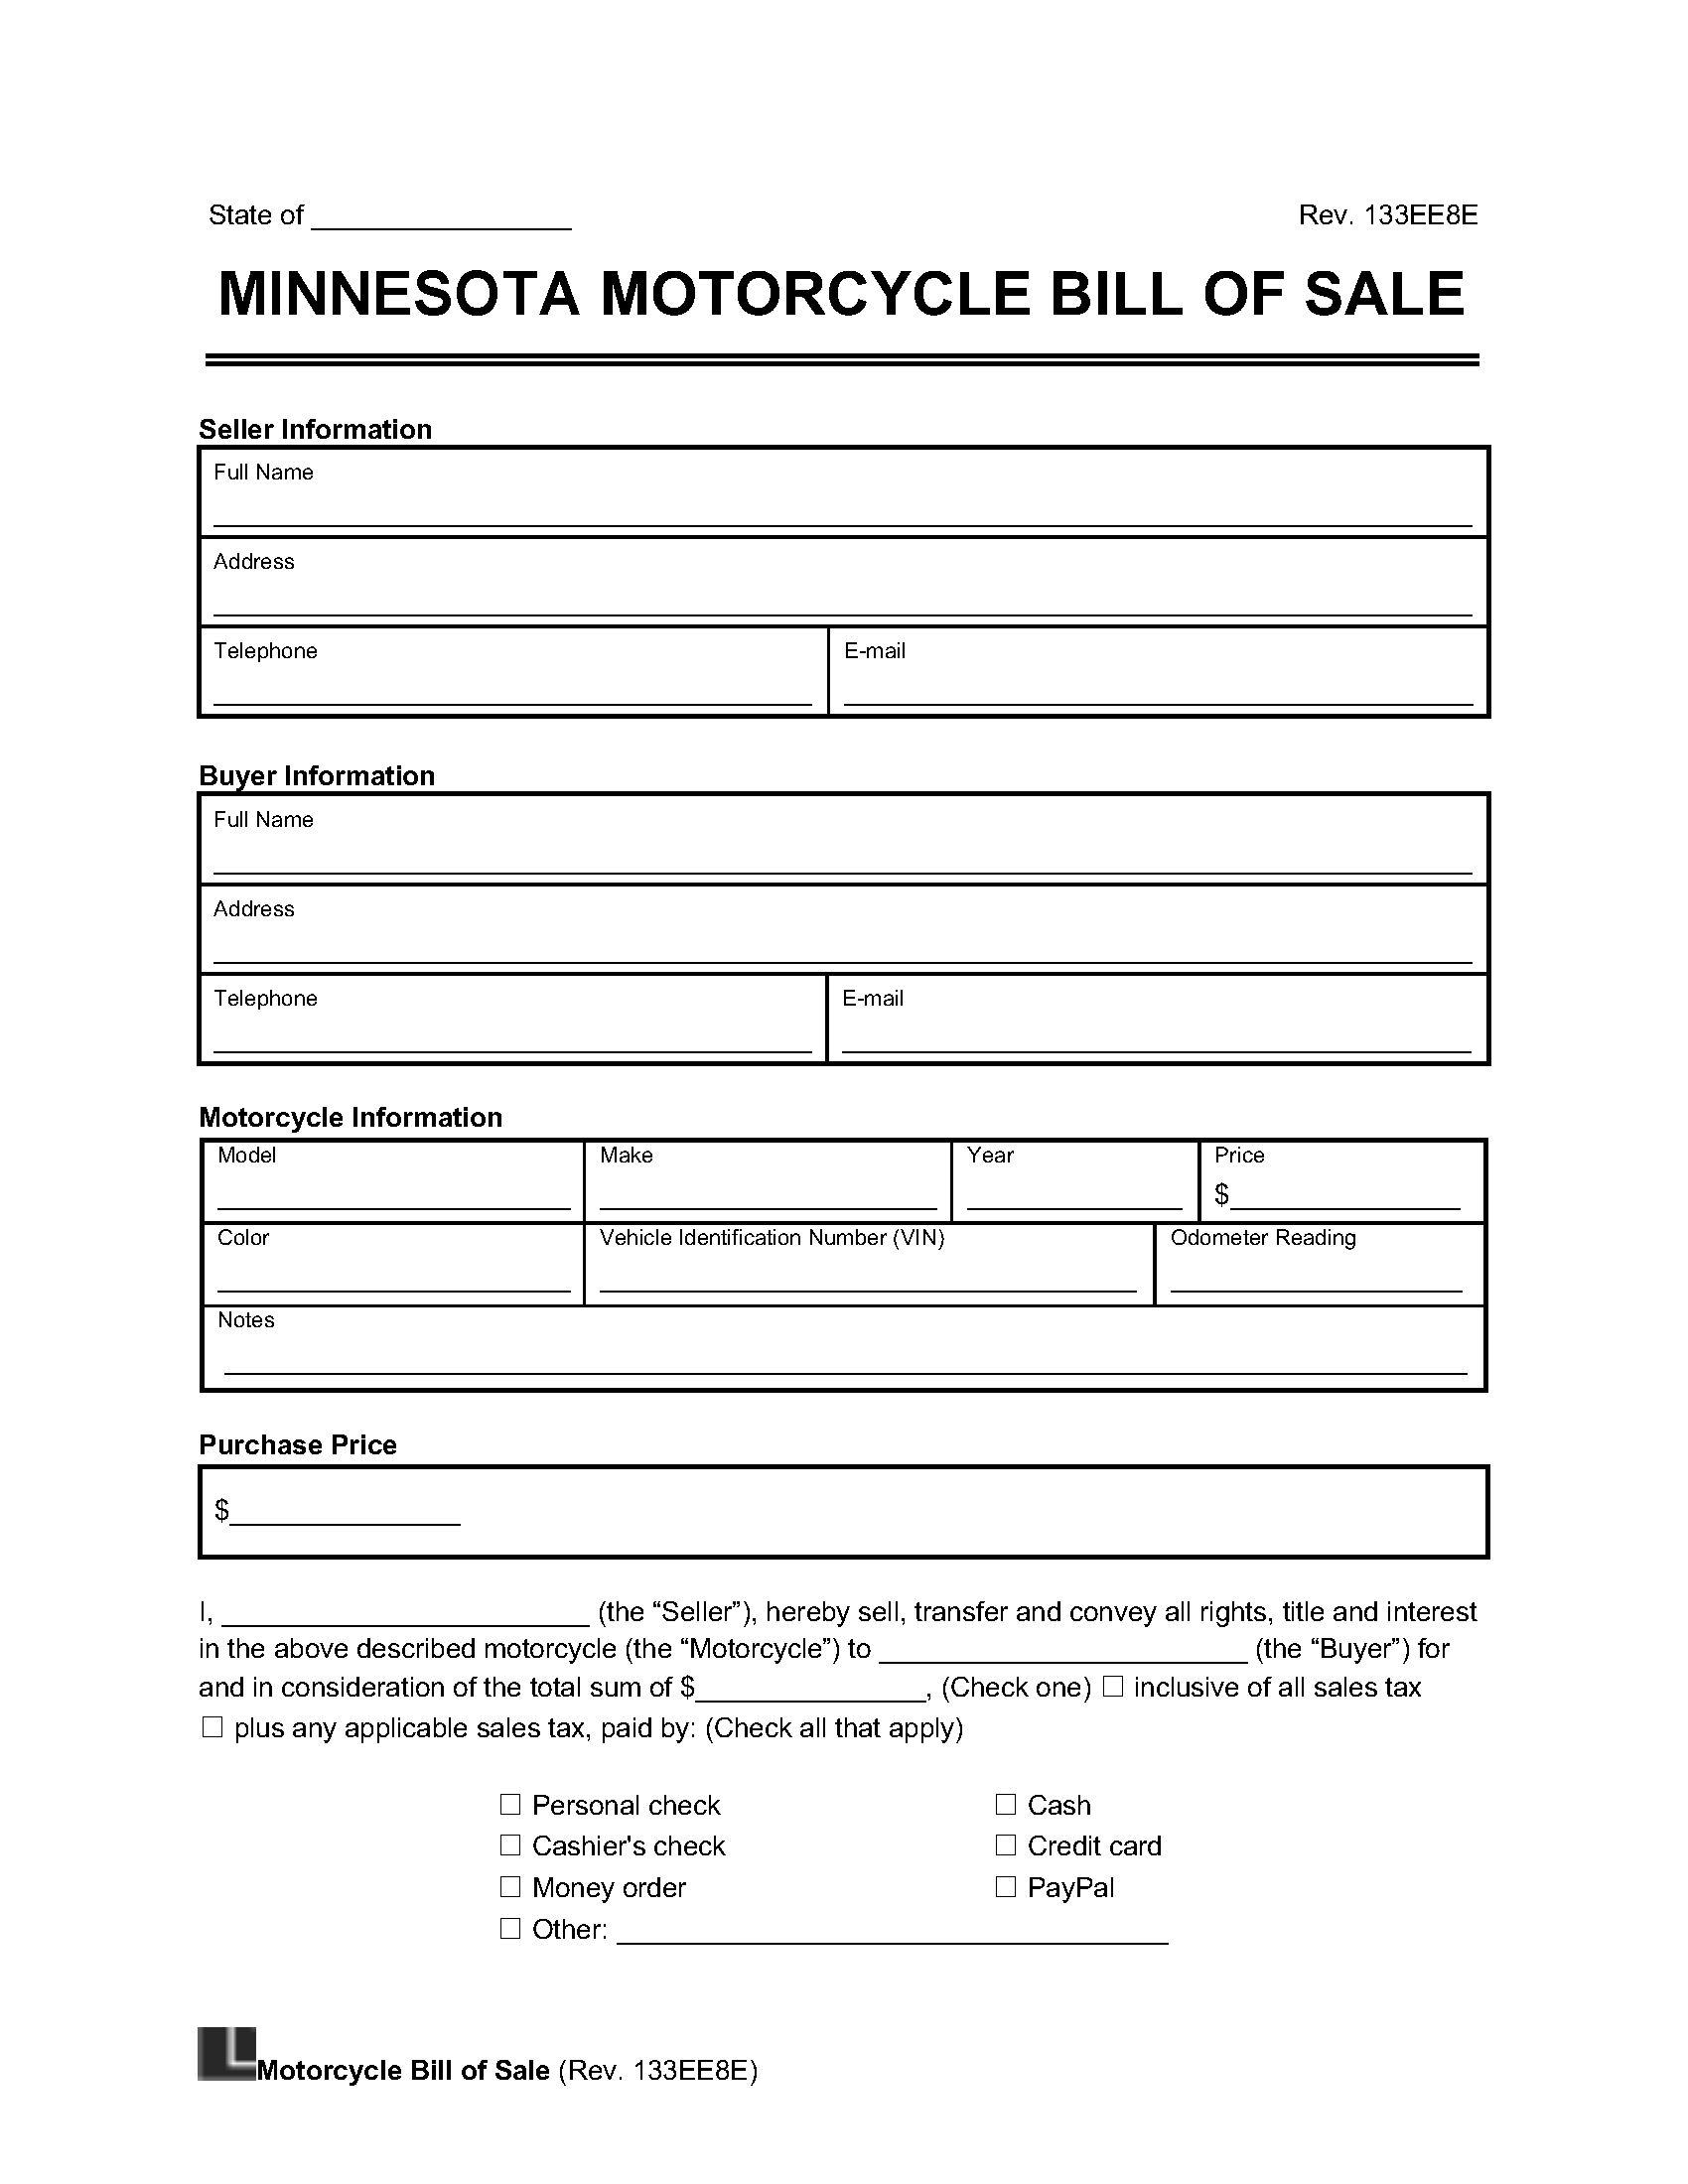 minnesota motorcycle bill of sale